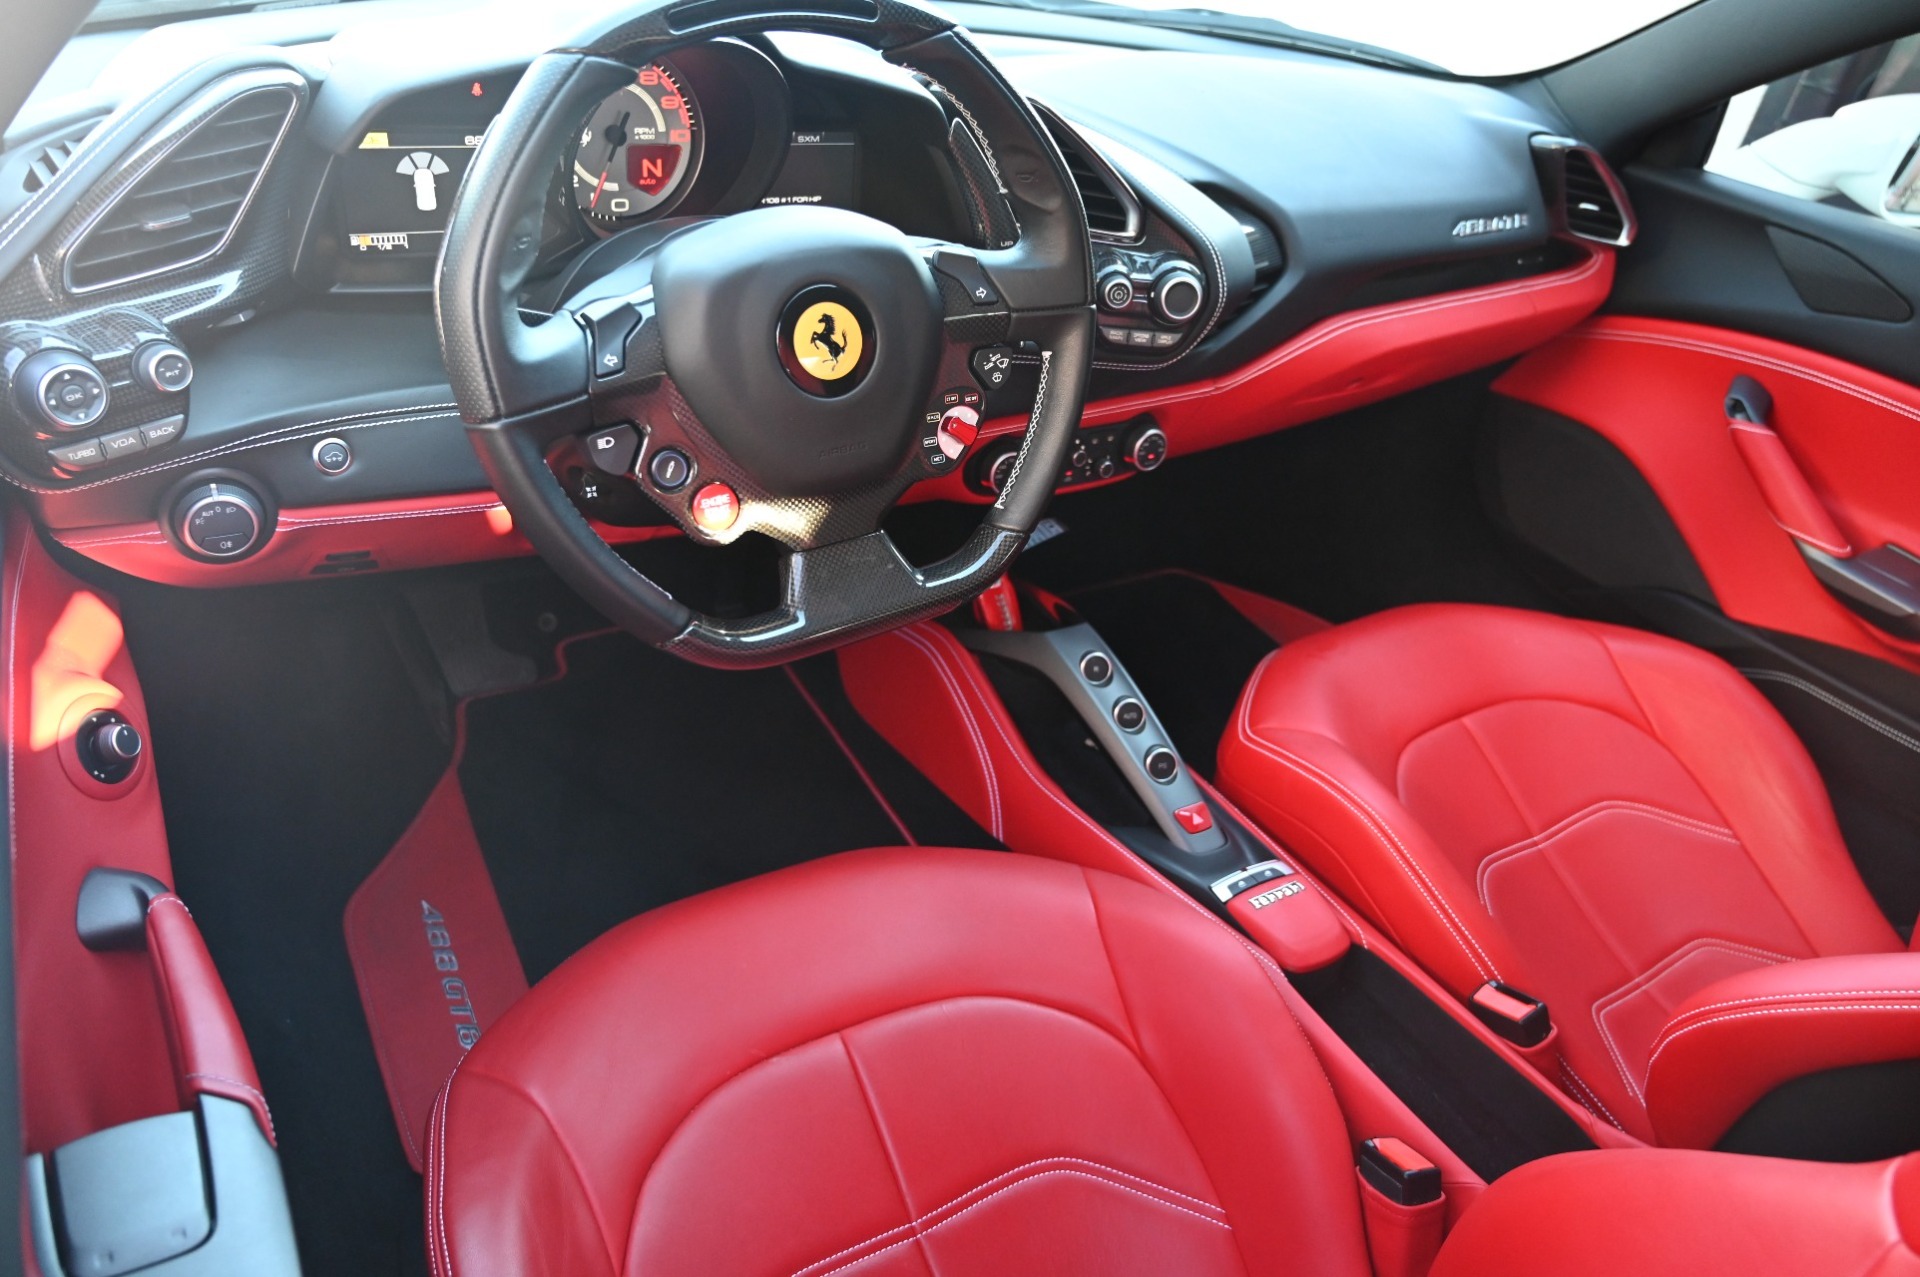 Used 2017 Ferrari 488 GTB For Sale ($249,900) | Marino Performance Motors  Stock #221813